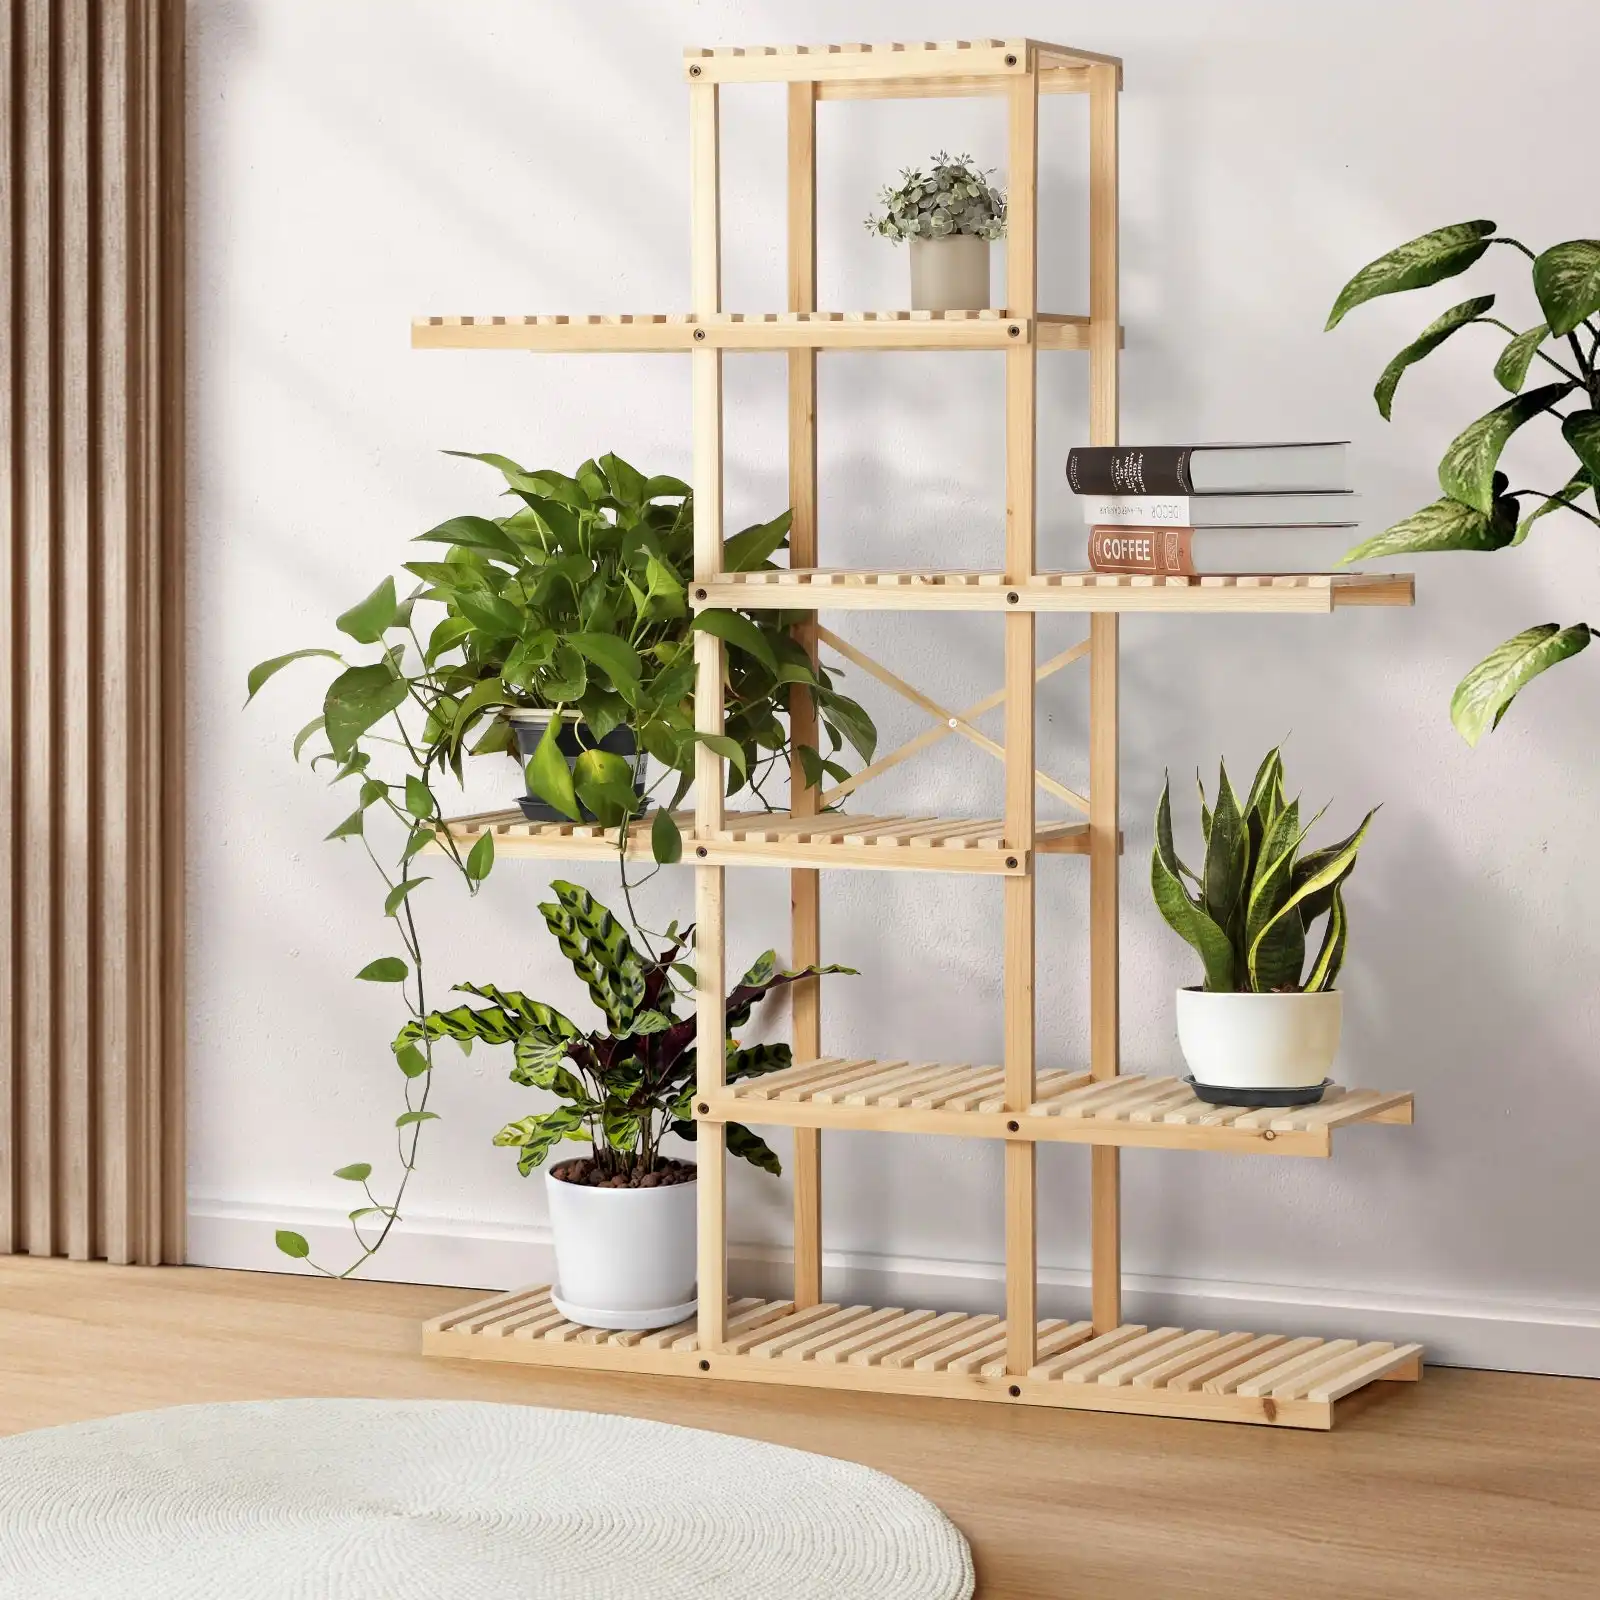 Livsip Bamboo Wood Plant Stand Flower Plants 6 Tiers Corner Display Shelves DIY